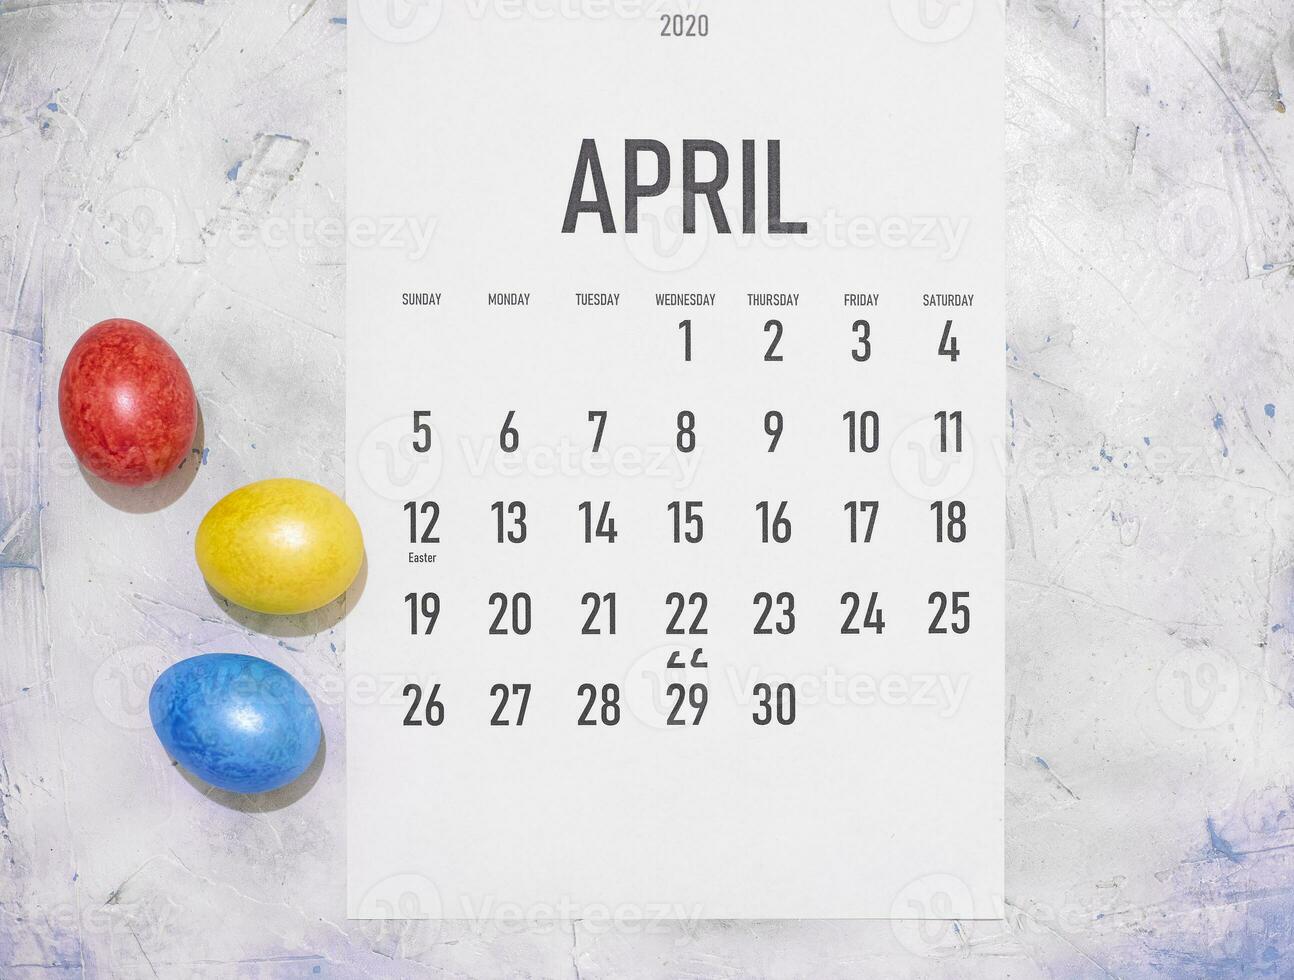 April 2020 monthly calendar photo